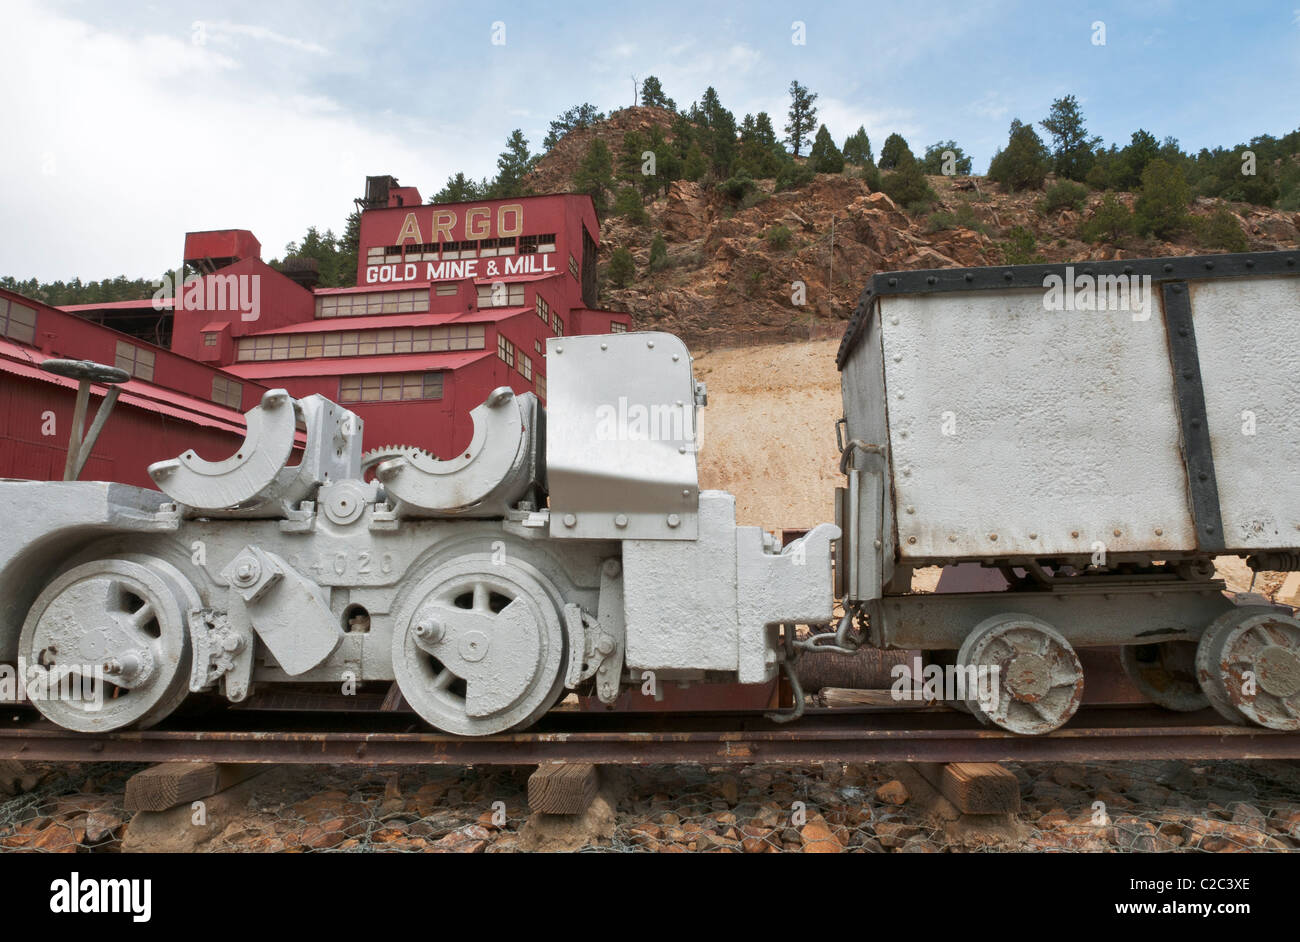 Colorado, Idaho Springs, Argo Gold Mine and Mill, ore cars Stock Photo